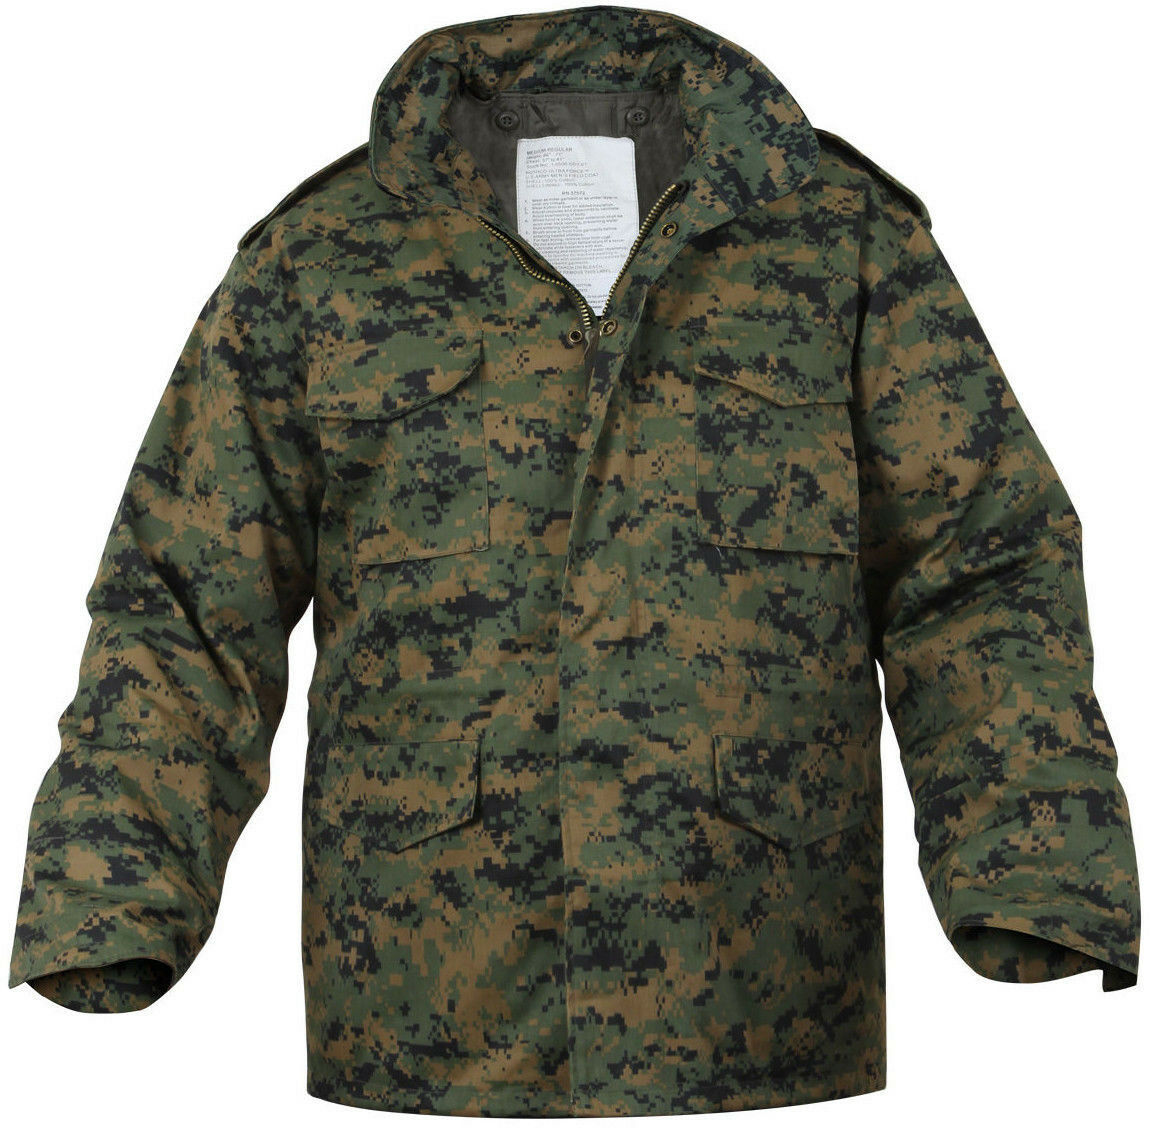 Woodland Digital Camouflage MARPAT M-65 Field Coat Army M65 Jacket w/ Liner - Men's Clothing